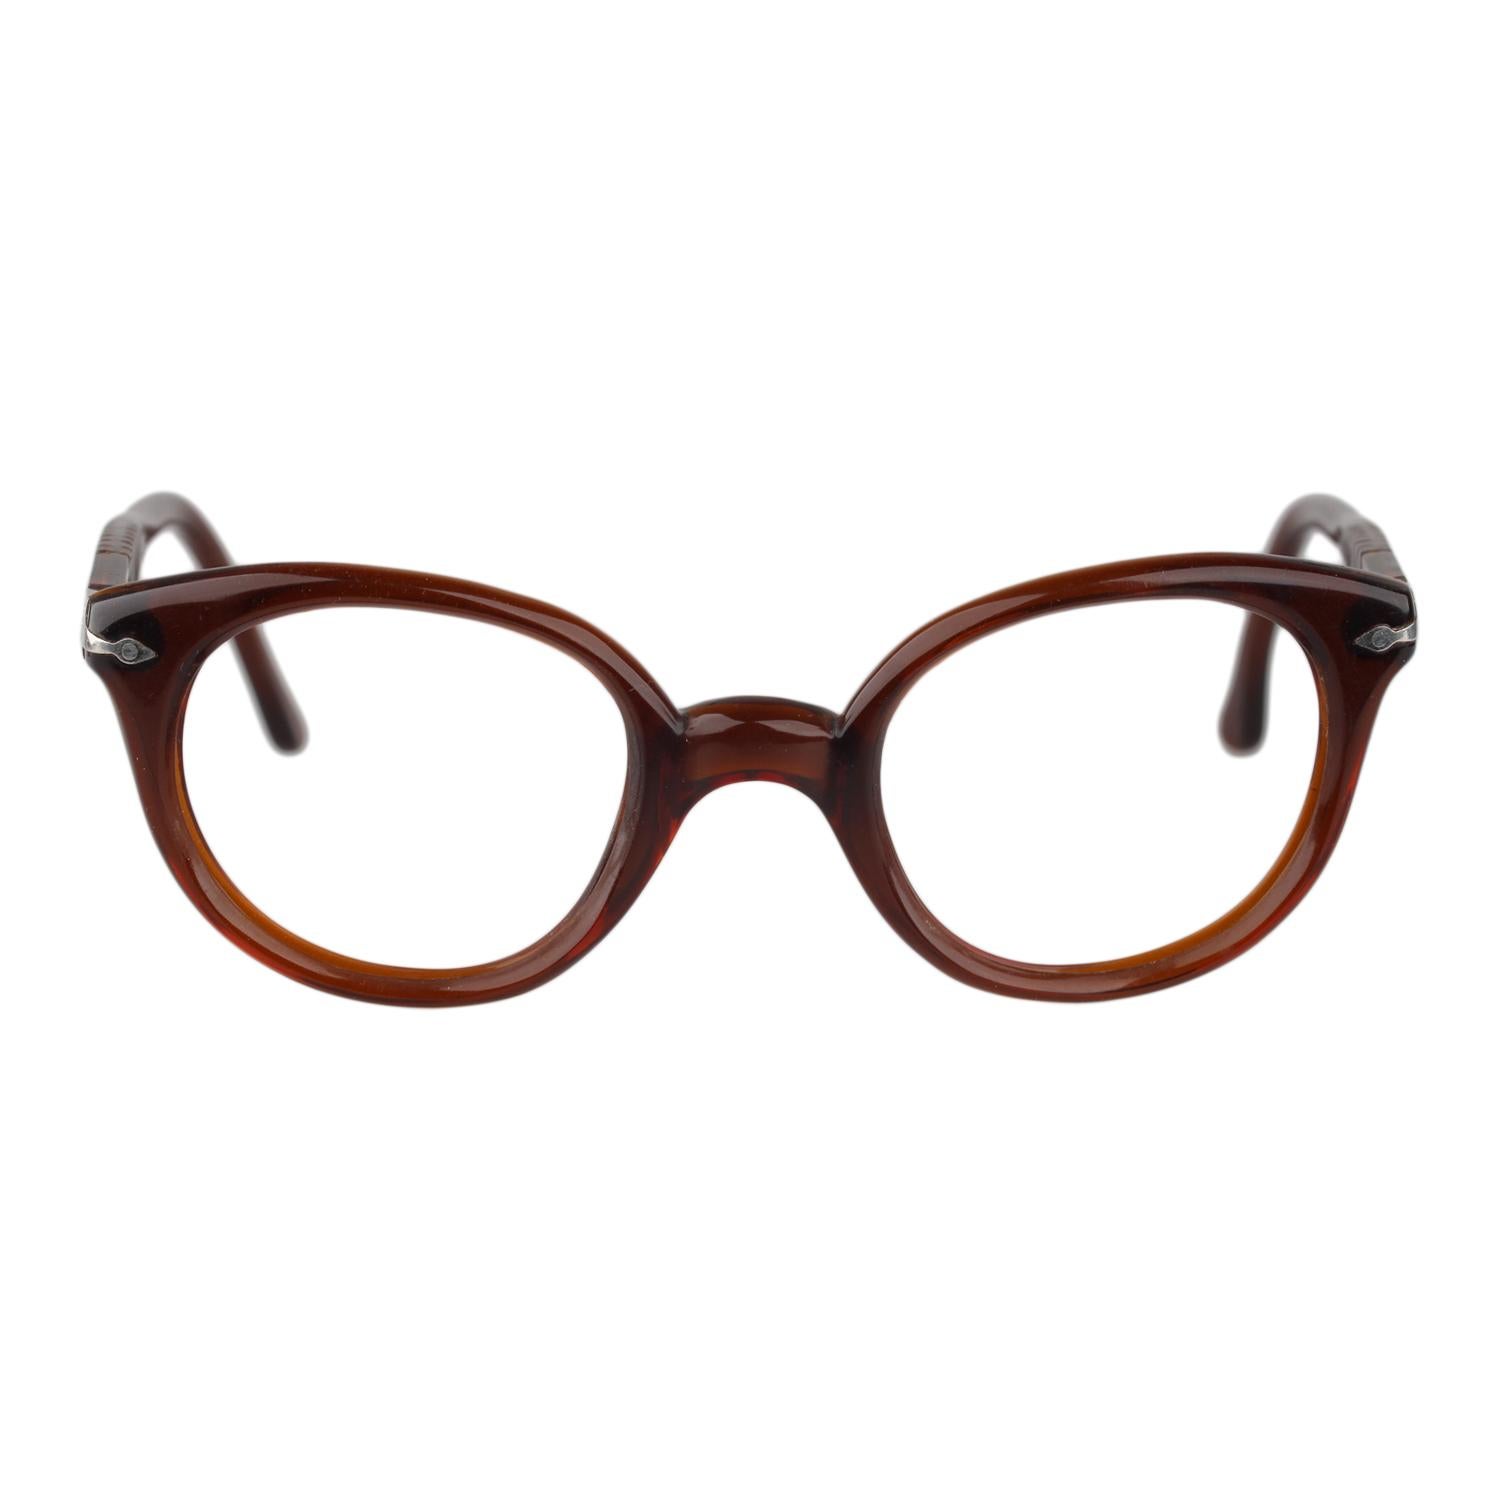 1940s eyeglasses